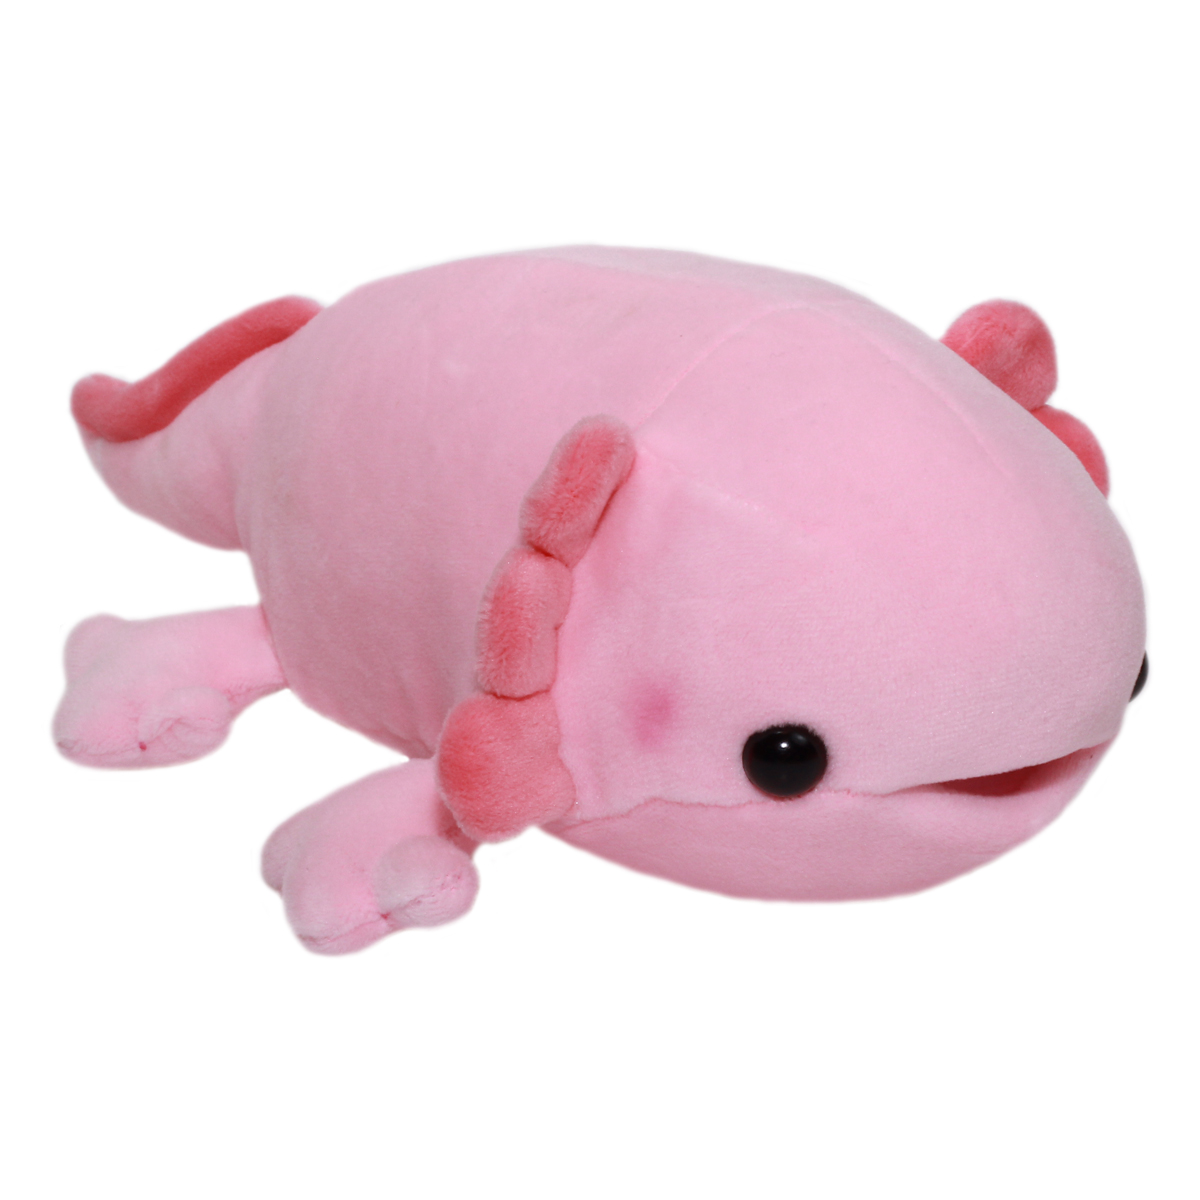 Aquarium Collection Plush Axolotl Plush Toy Super Soft Stuffed Animal Pink Uparupa